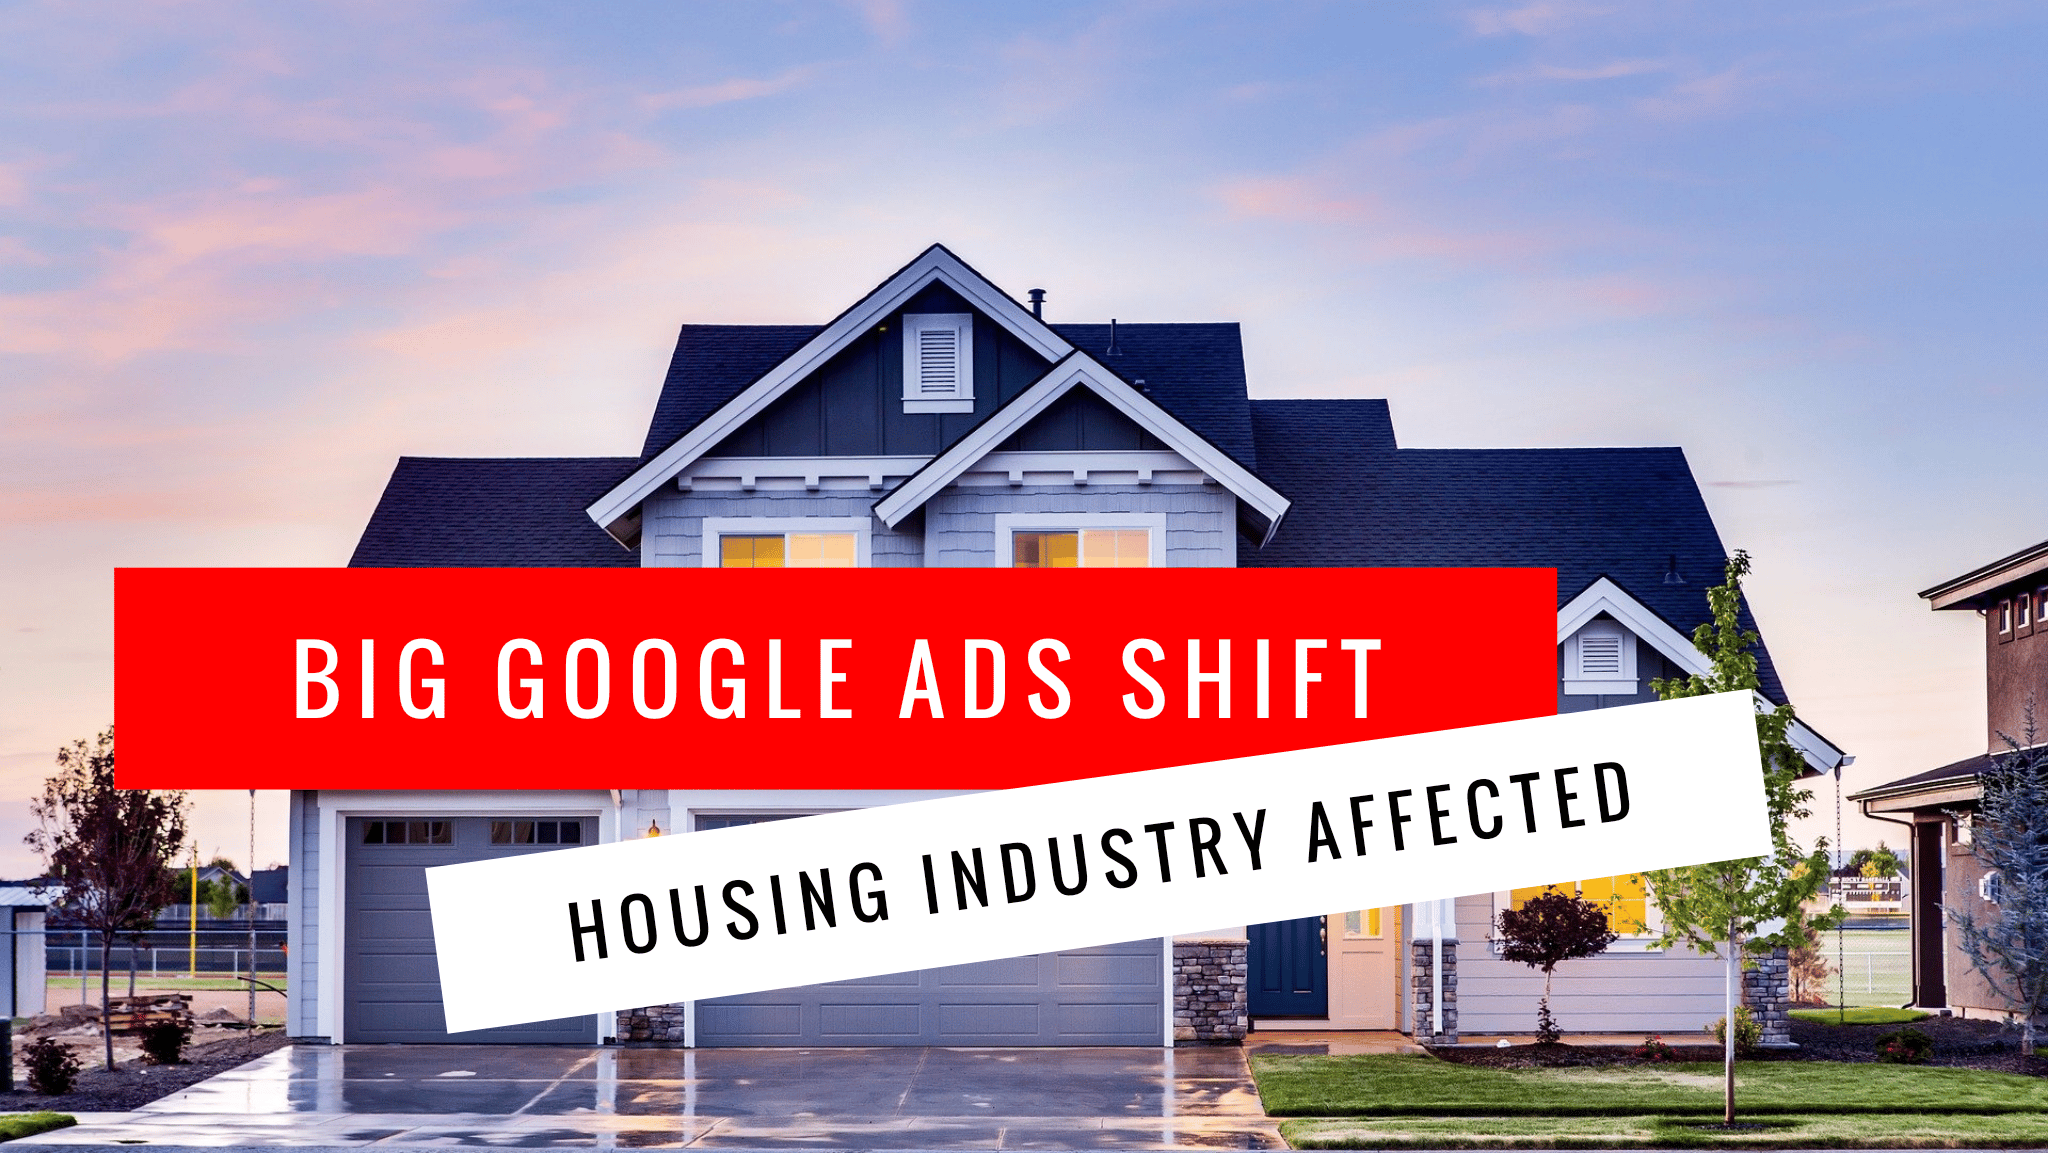 Big Google Ads shift has begun, affecting the housing industry